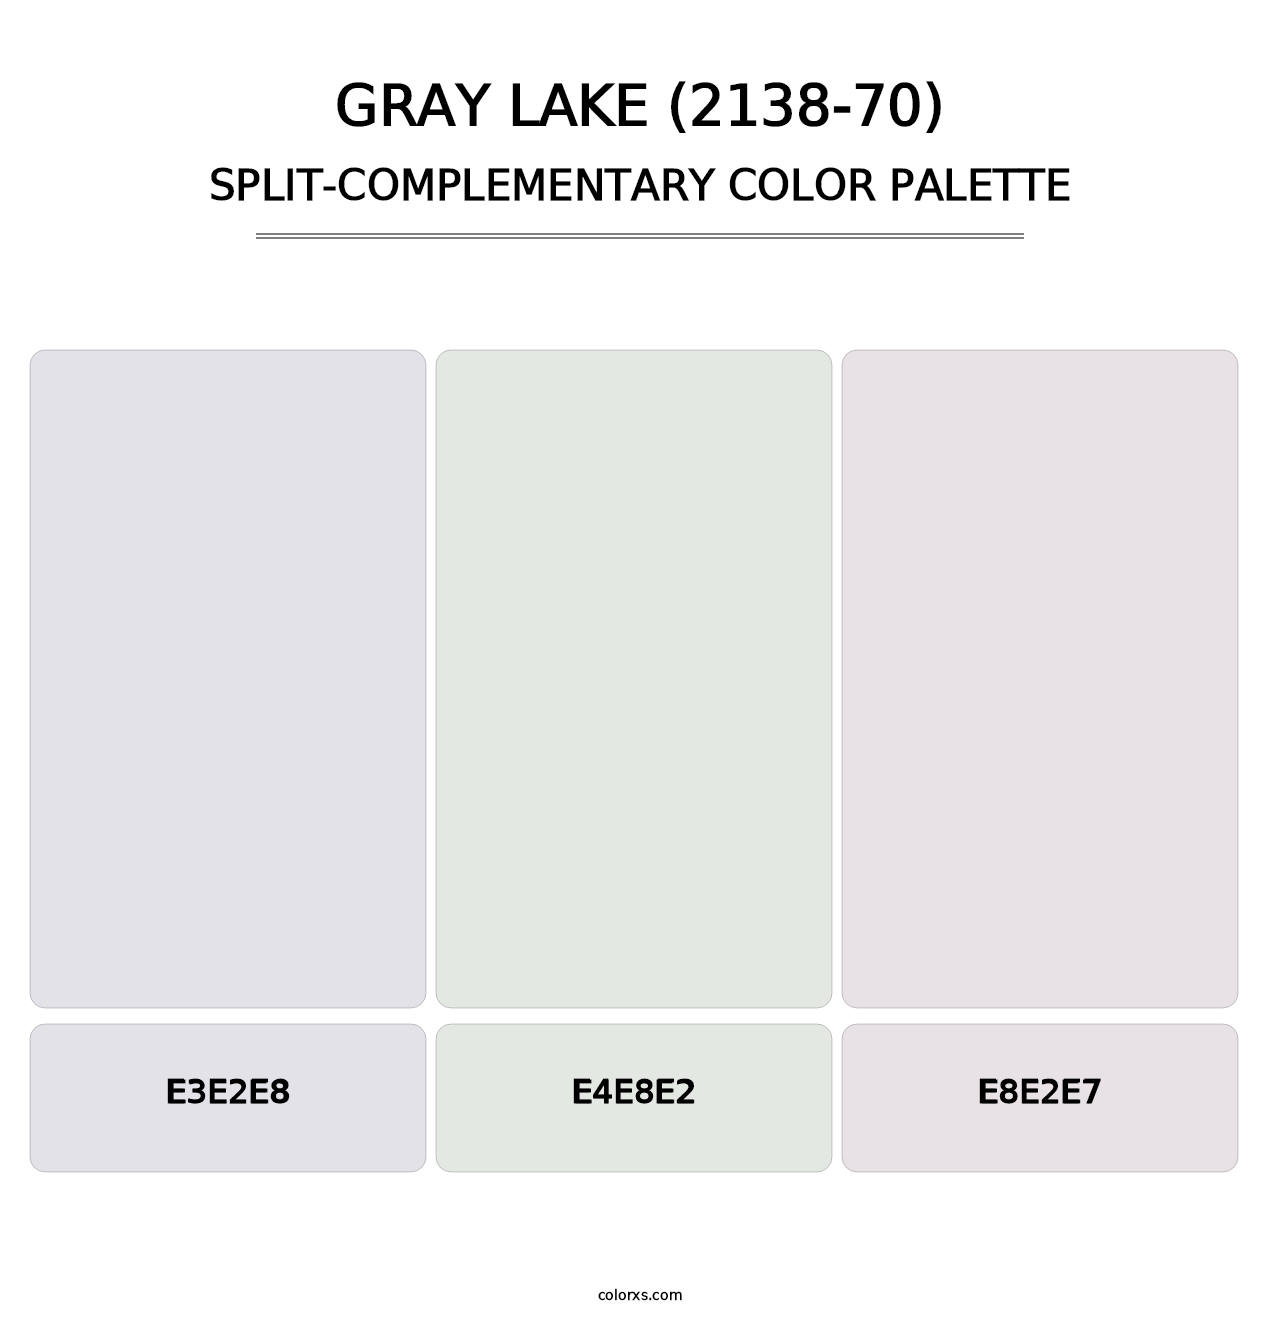 Gray Lake (2138-70) - Split-Complementary Color Palette